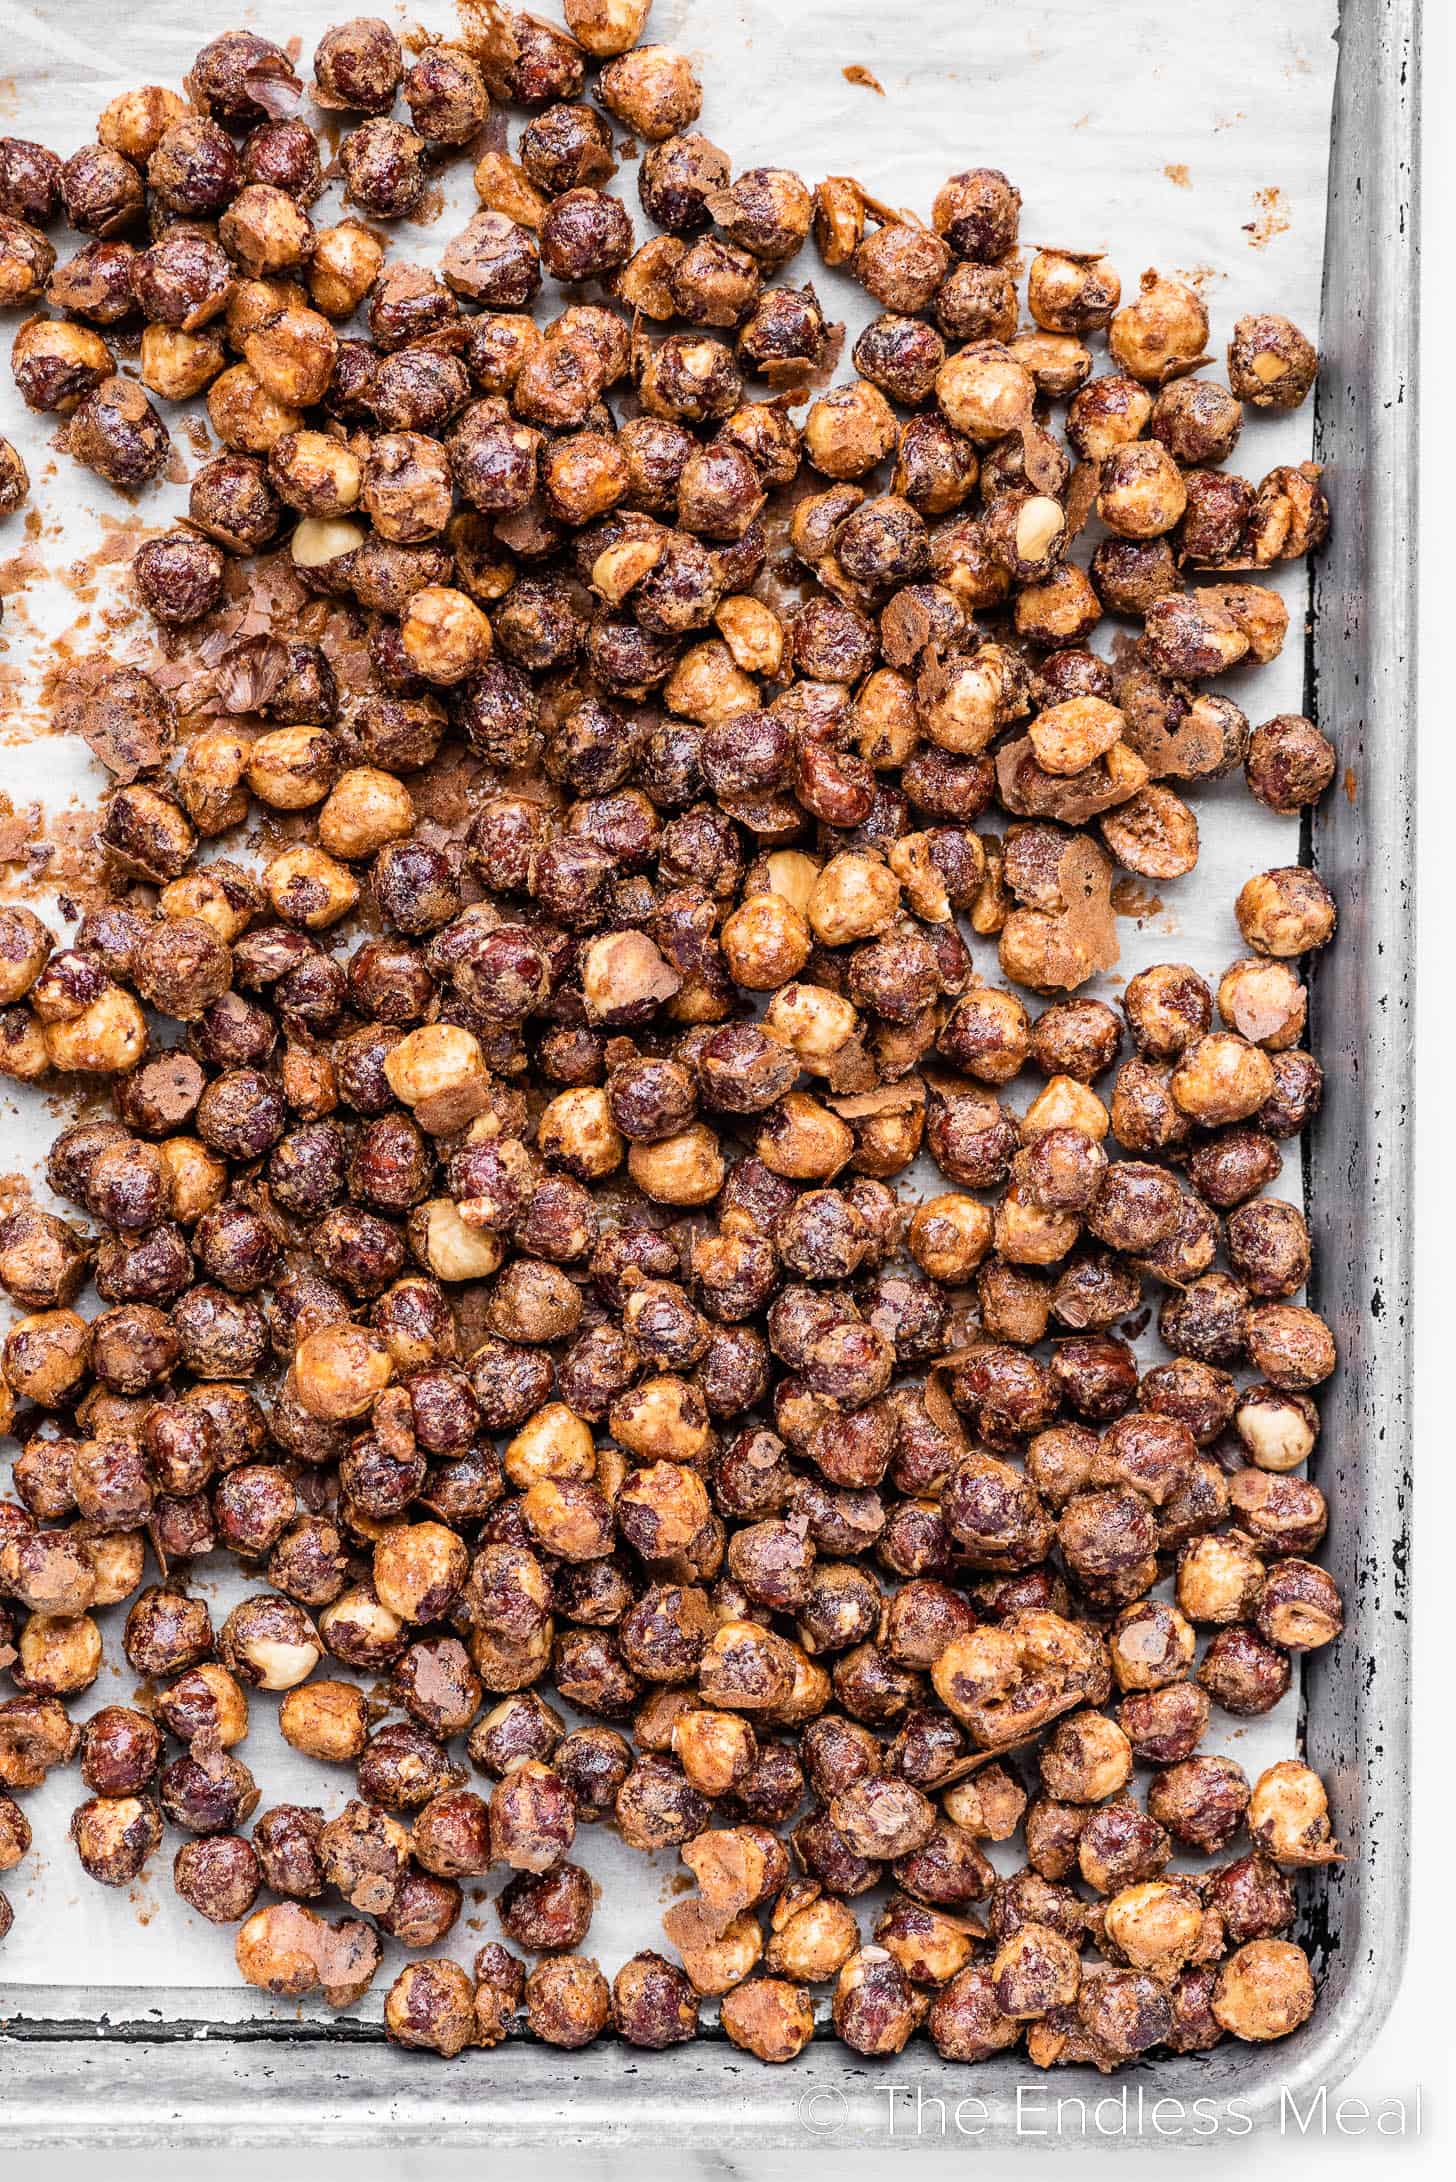 Candied Hazelnuts on a baking sheet